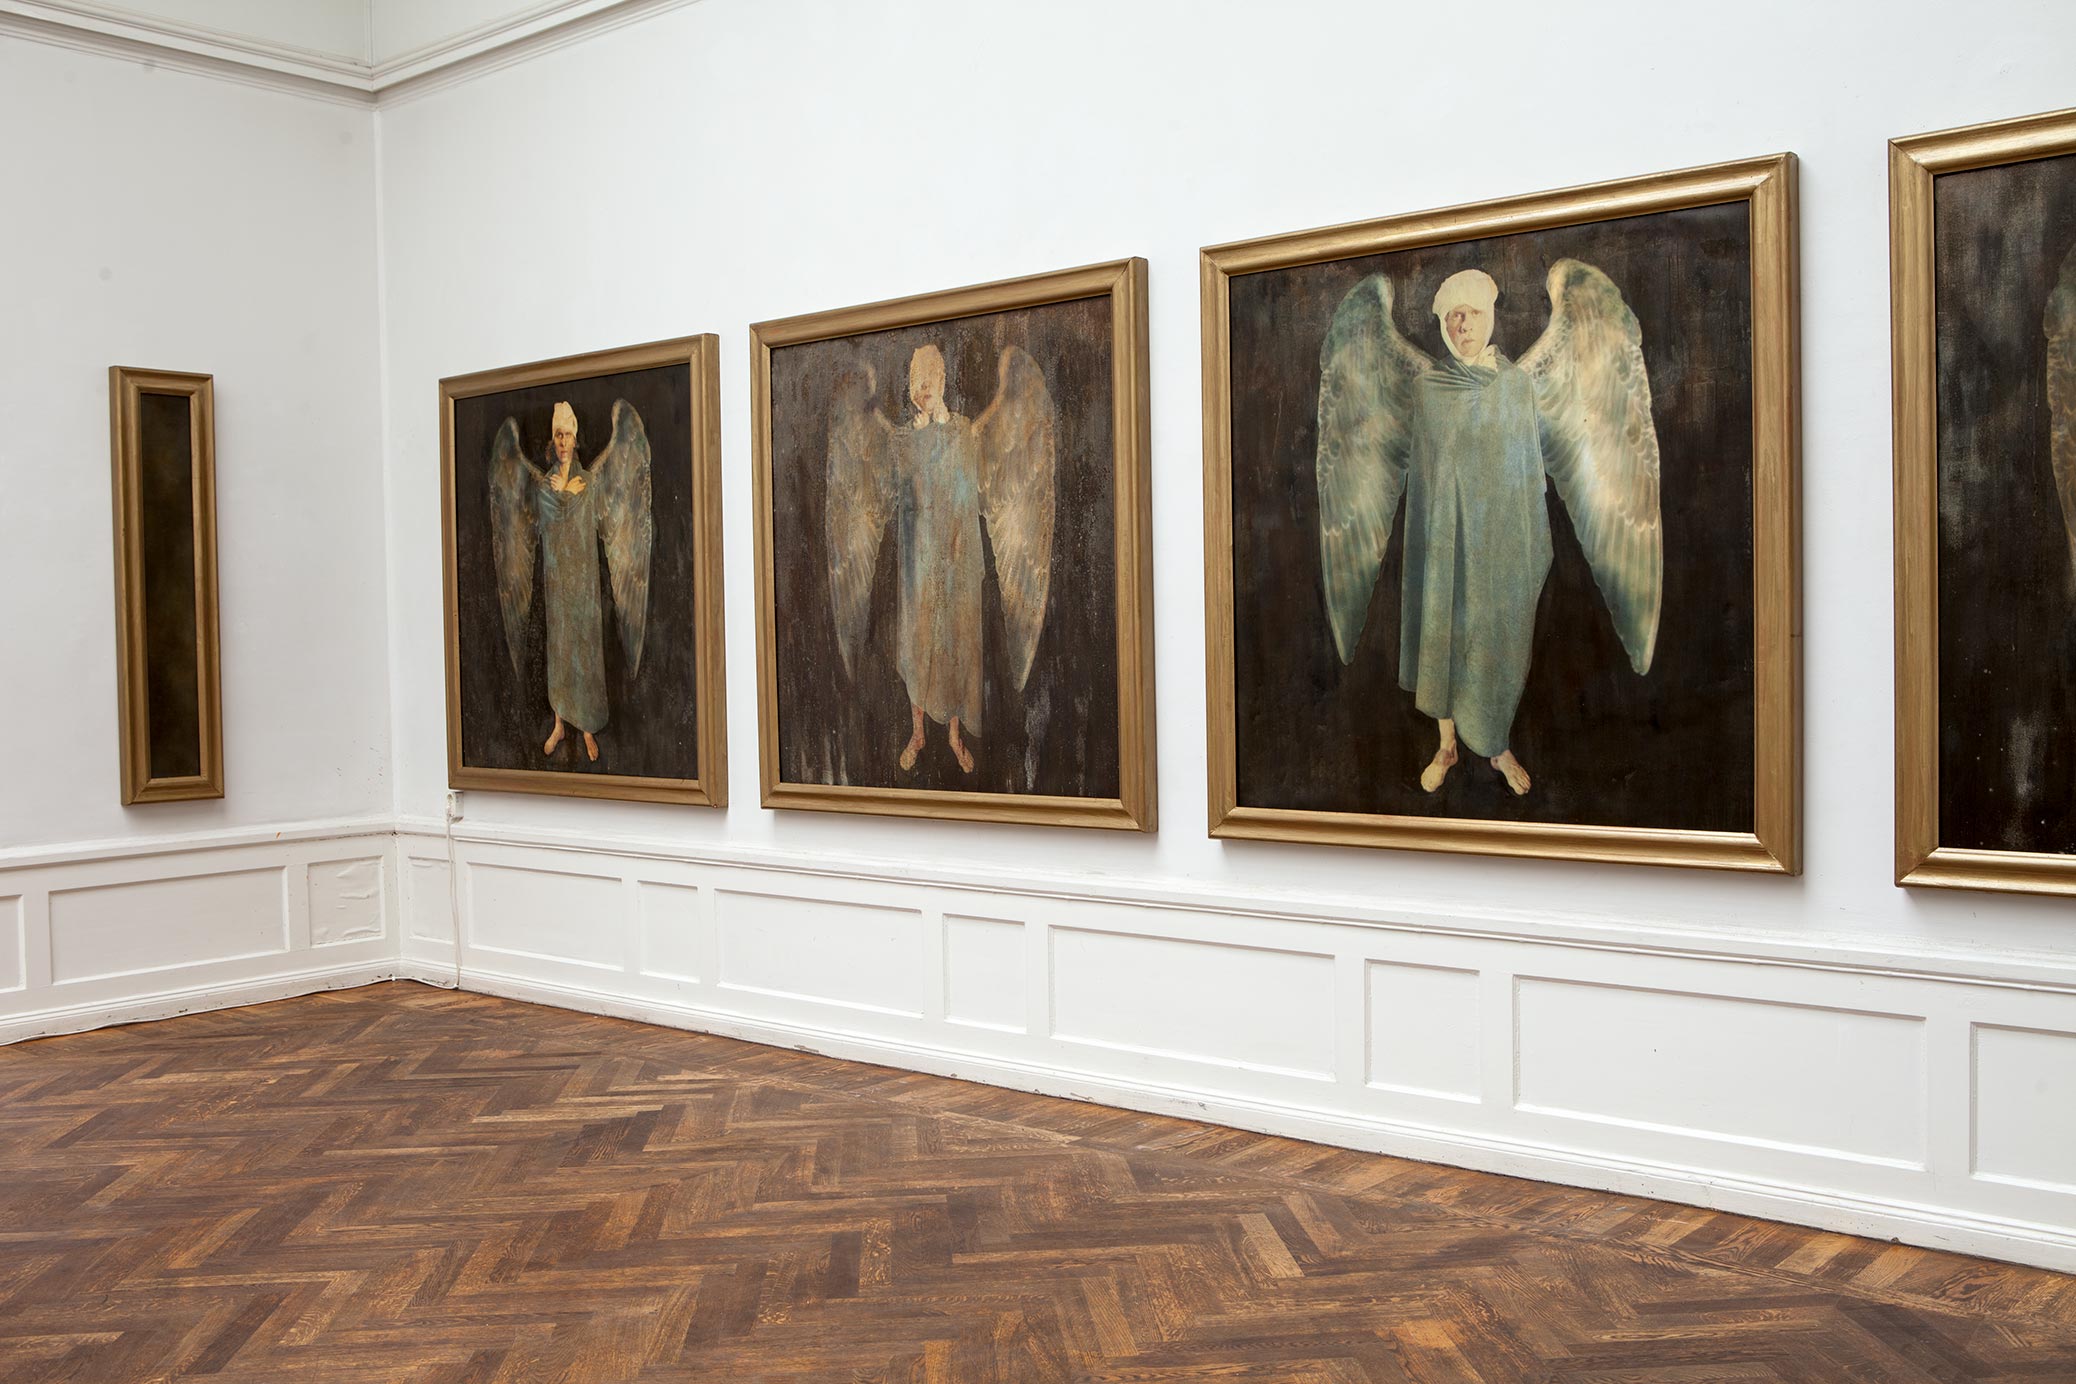 Being Björn Perborg, exhibition at Konstnärshuset. Flygfän, paintings of wounded angels.